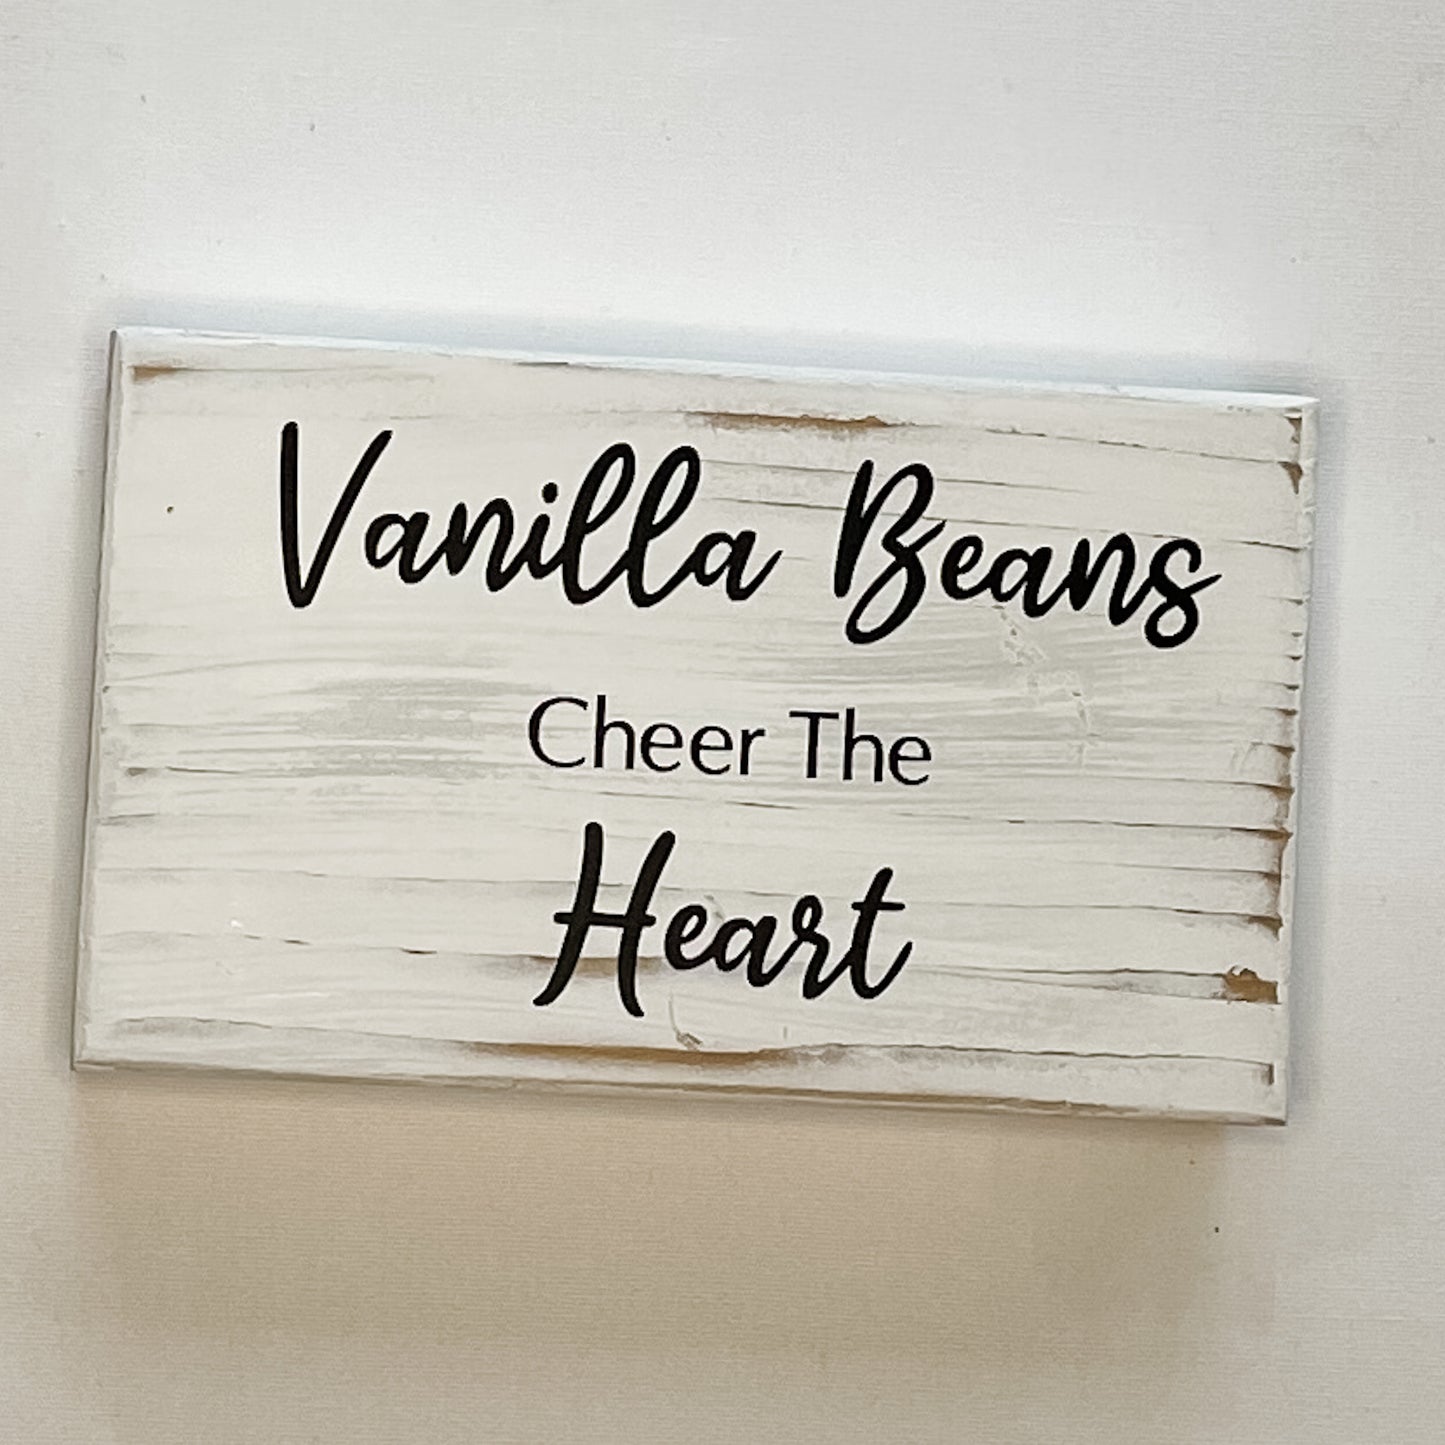 Vanilla sign blocks